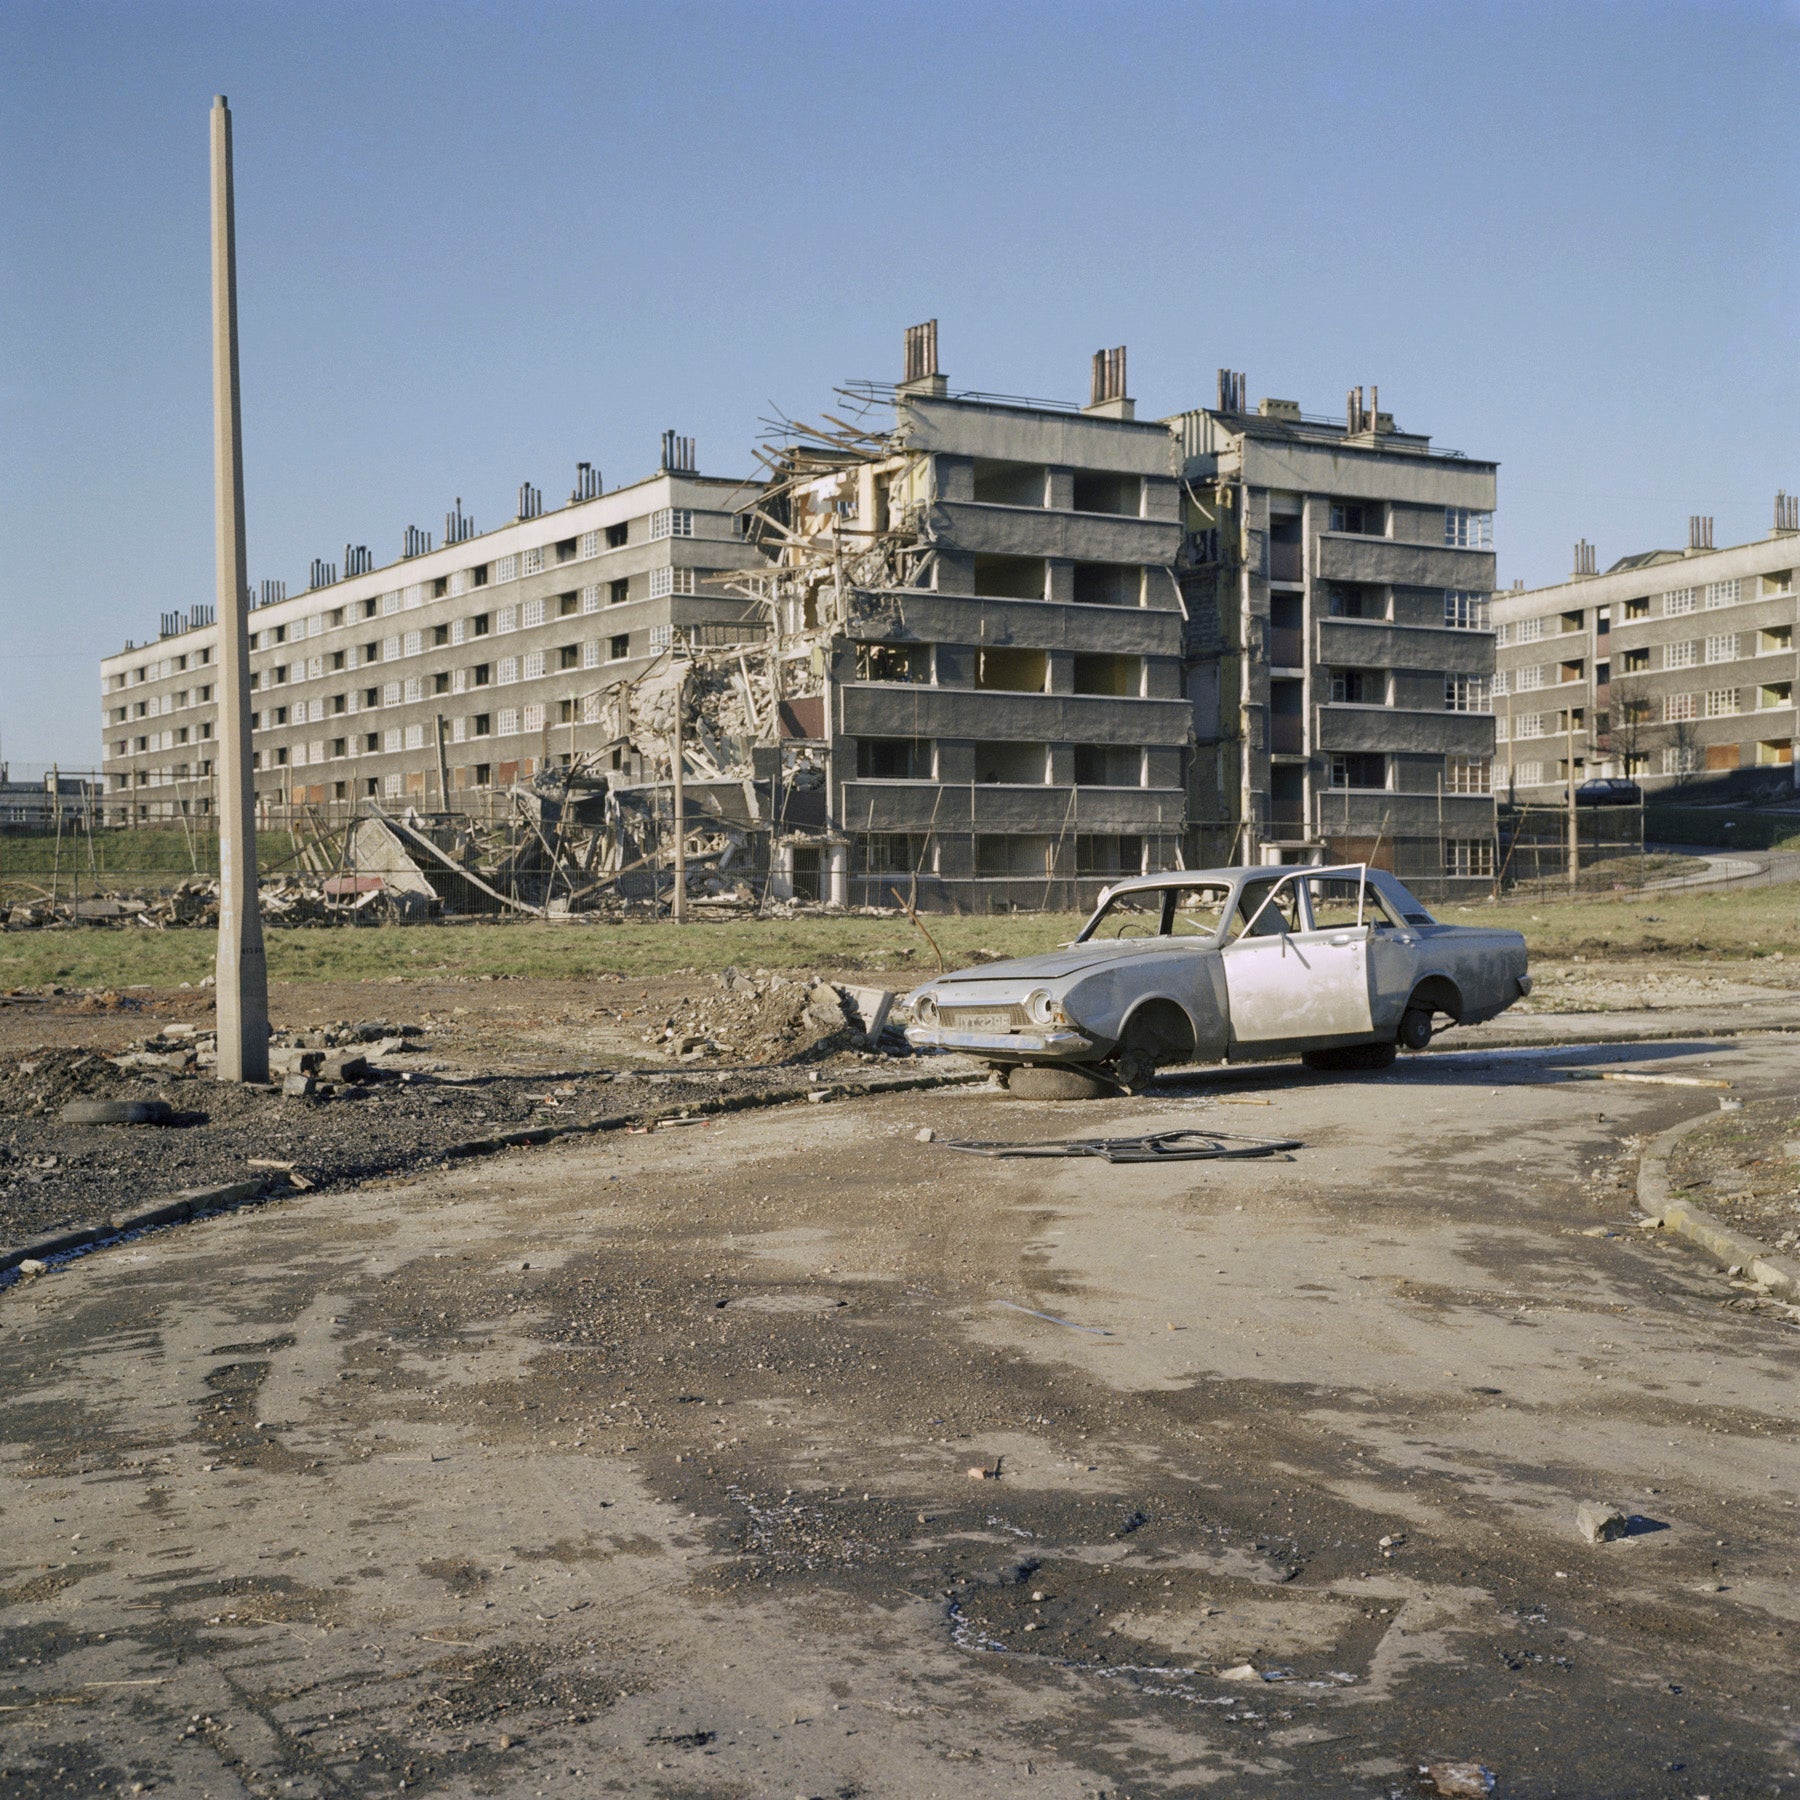 Abandoned car, Wright House, Quarry Hill Flats, Leeds, 1978 - 7x9" Print